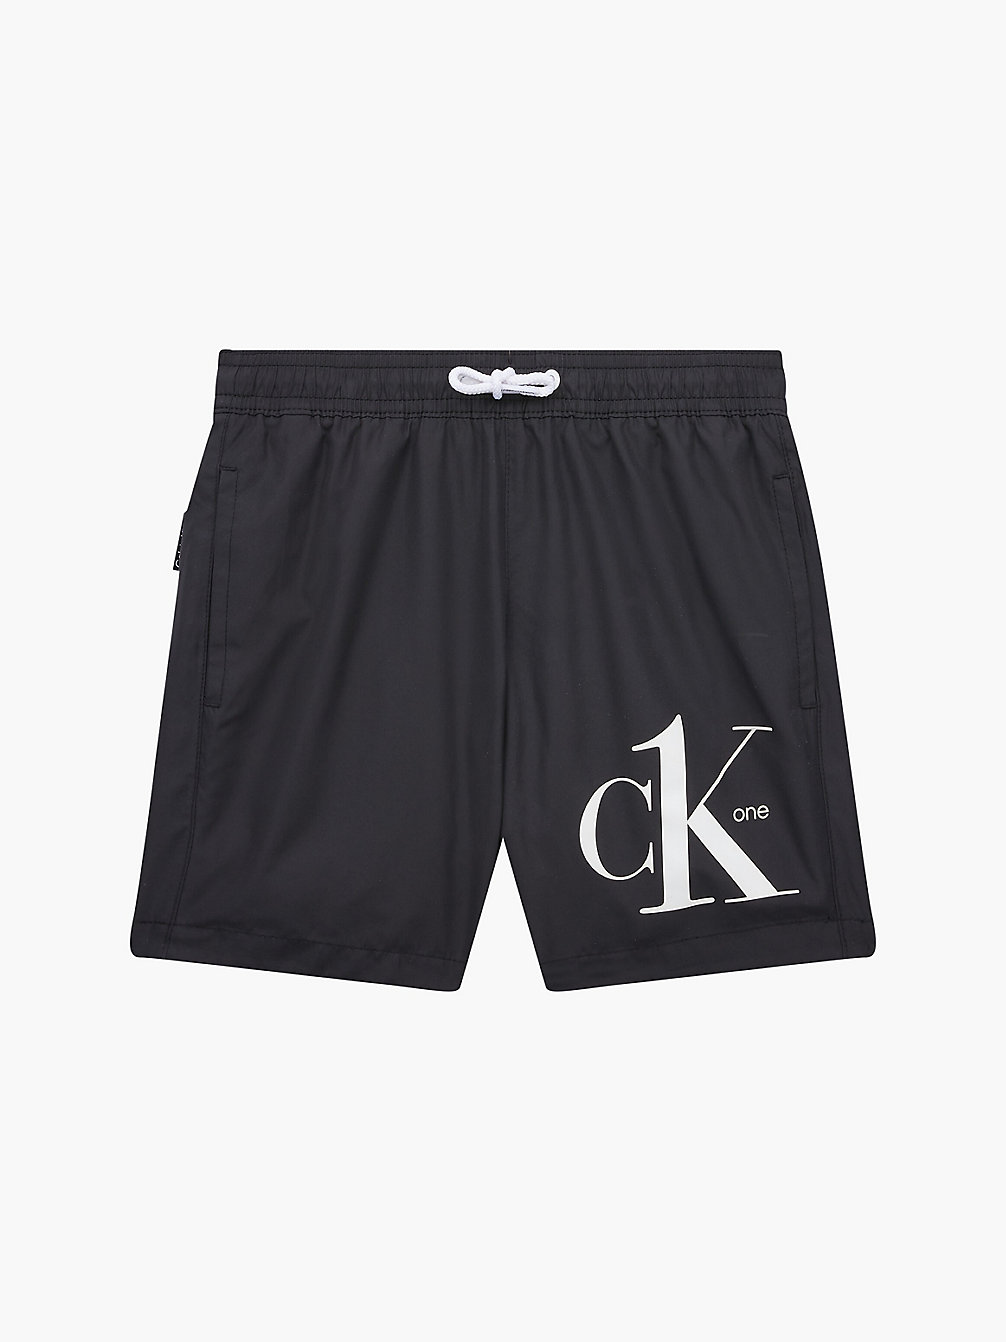 PVH BLACK > Jongenszwemshorts - CK One > undefined jongens - Calvin Klein